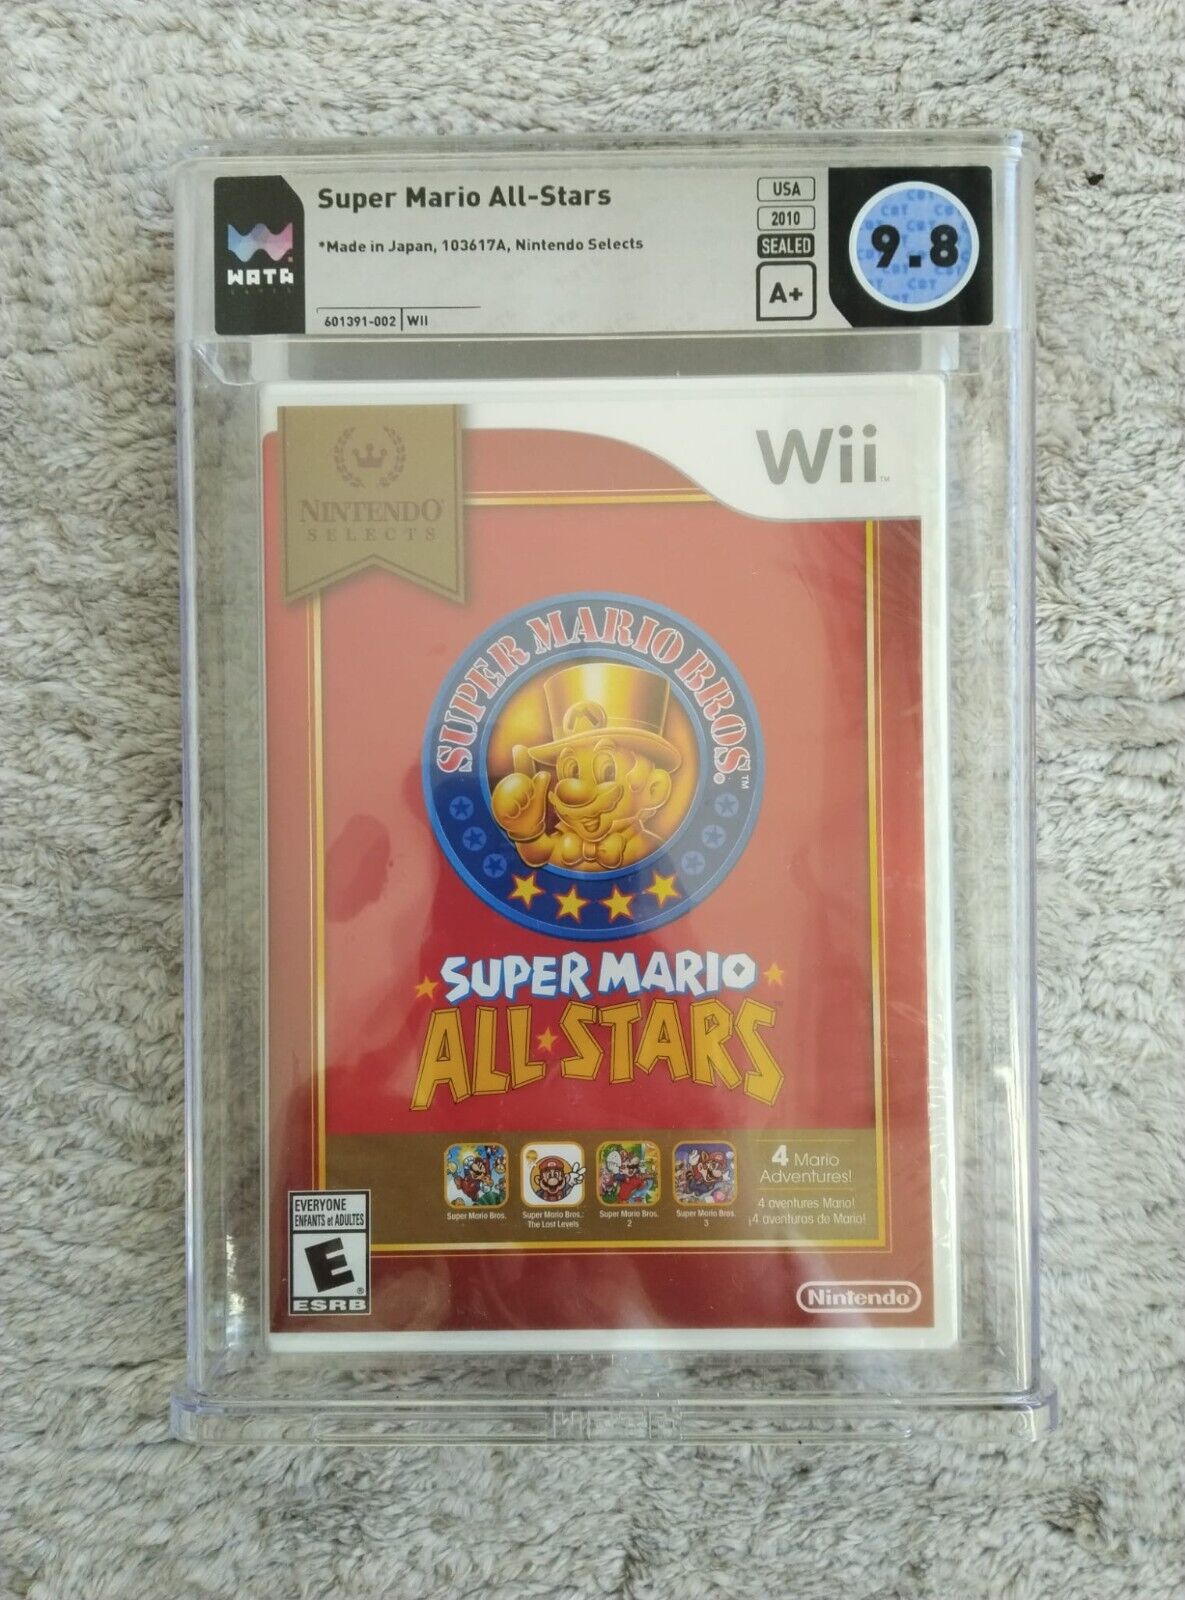 Nintendo Wii Super Mario All Stars Sealed WATA 9.8 - POP 1, None Higher !! 2010